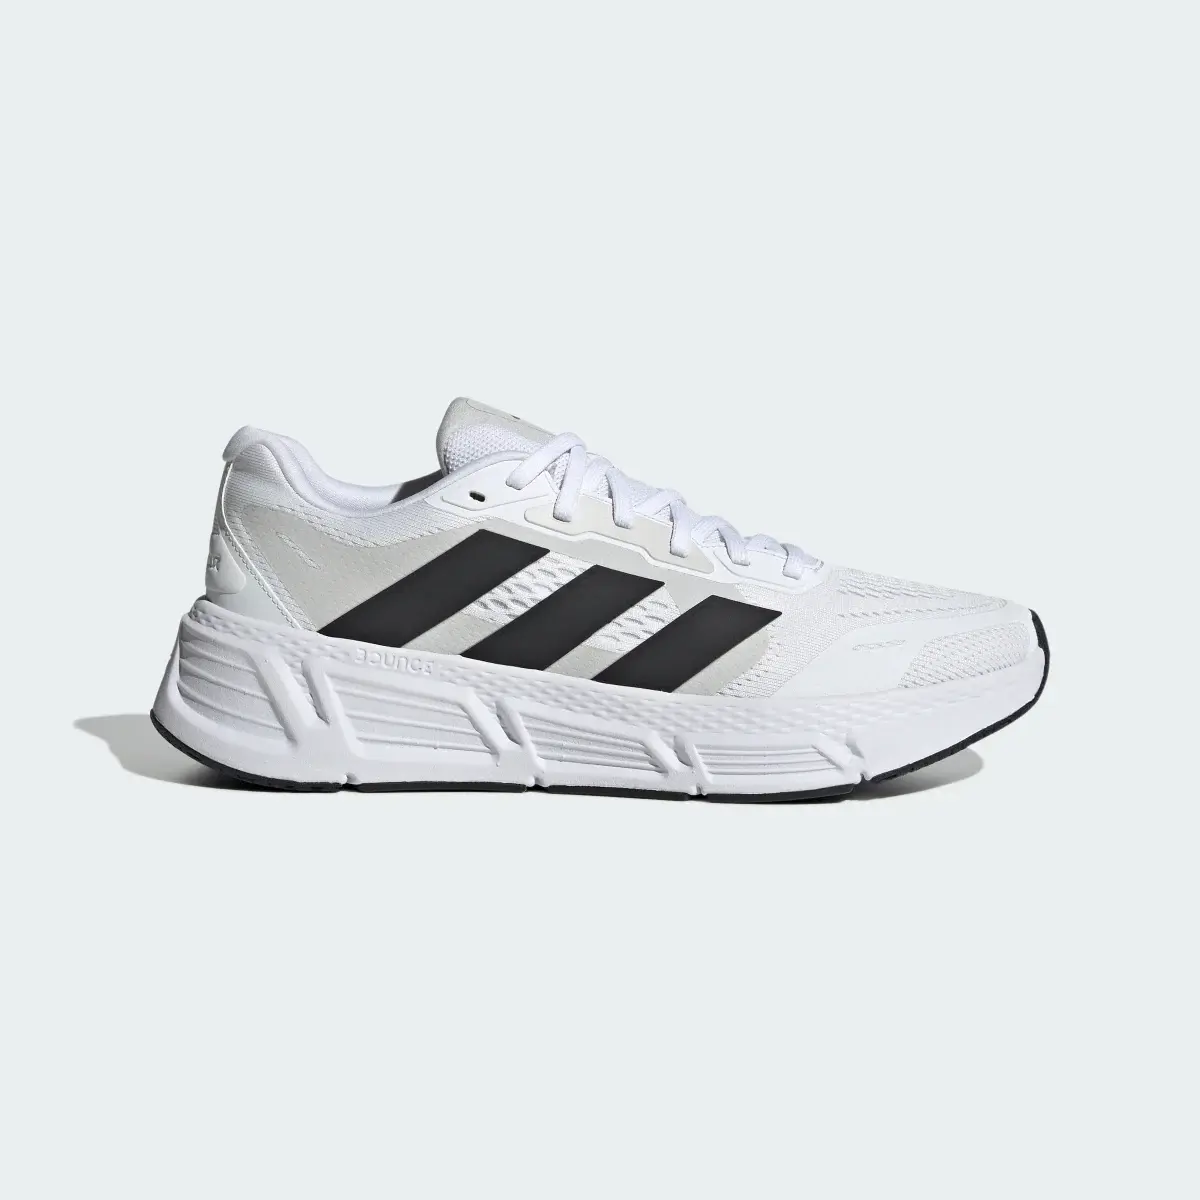 Adidas Questar Shoes. 2